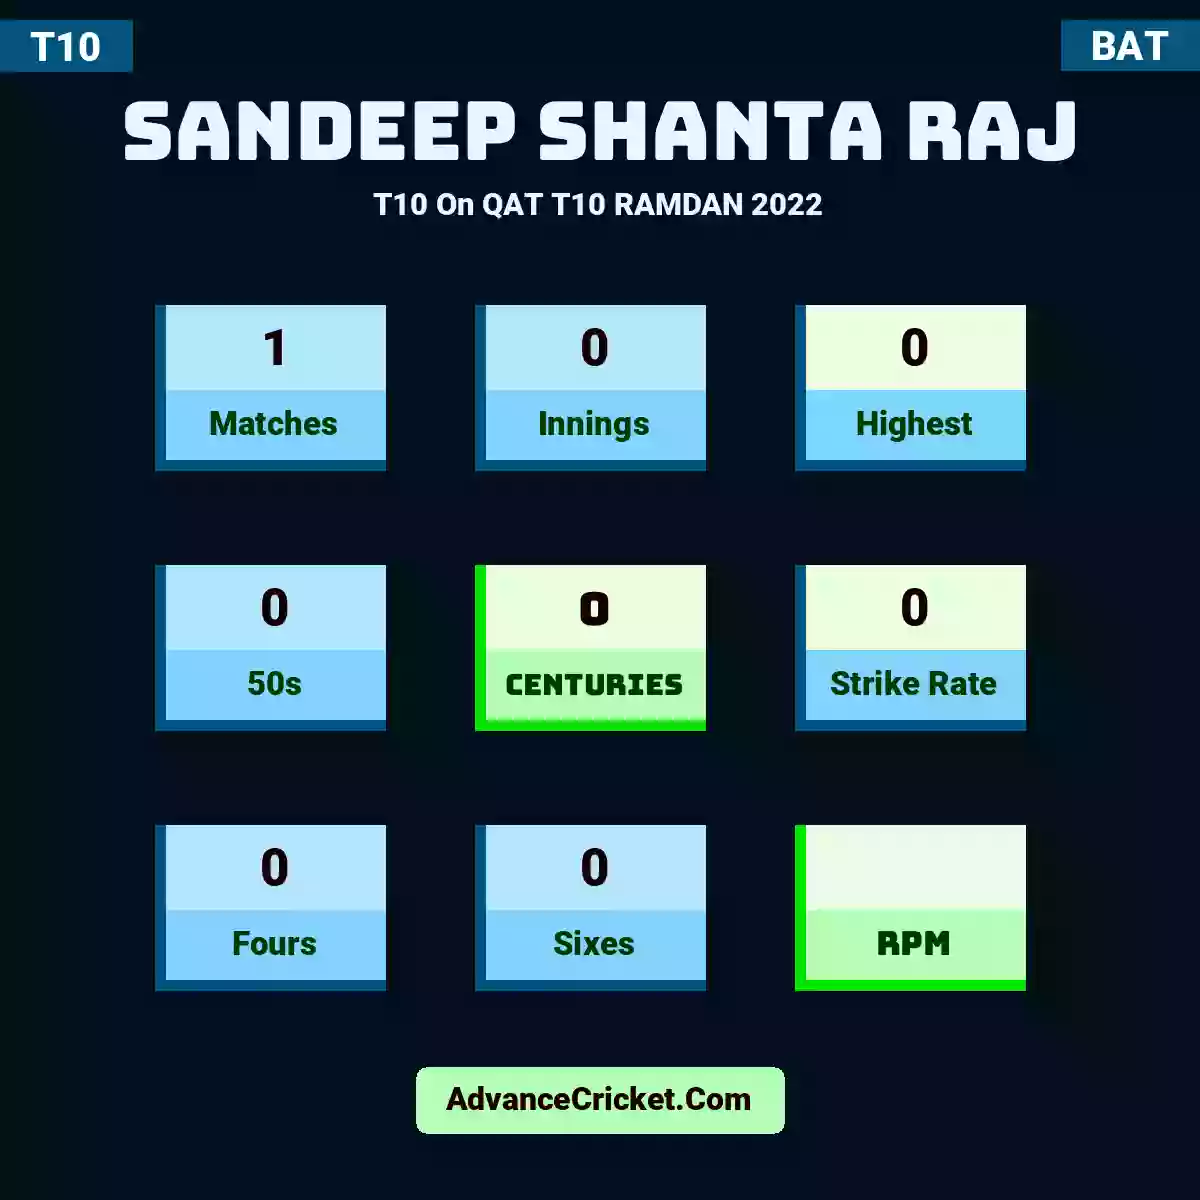 Sandeep Shanta Raj T10  On QAT T10 RAMDAN 2022, Sandeep Shanta Raj played 1 matches, scored 0 runs as highest, 0 half-centuries, and 0 centuries, with a strike rate of 0. S.Raj hit 0 fours and 0 sixes.